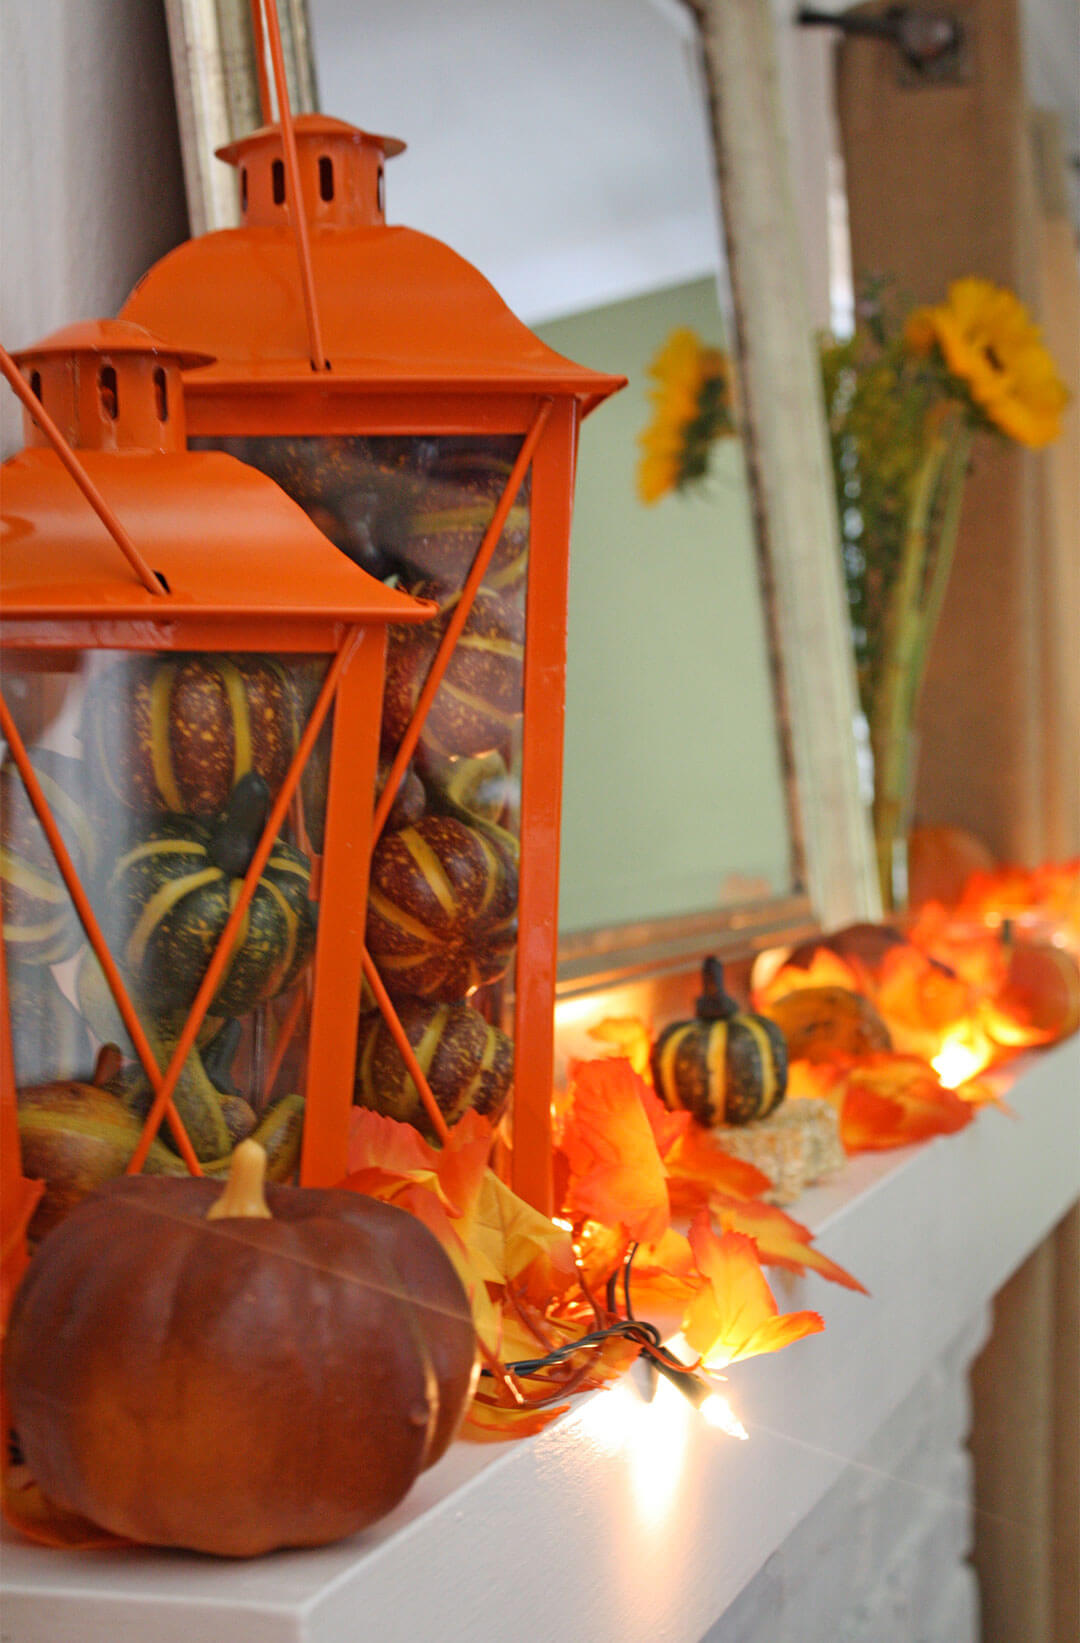 Orange Glow and Lanterns Light this Mantel | Fall Mantel Decorating Ideas For Halloween